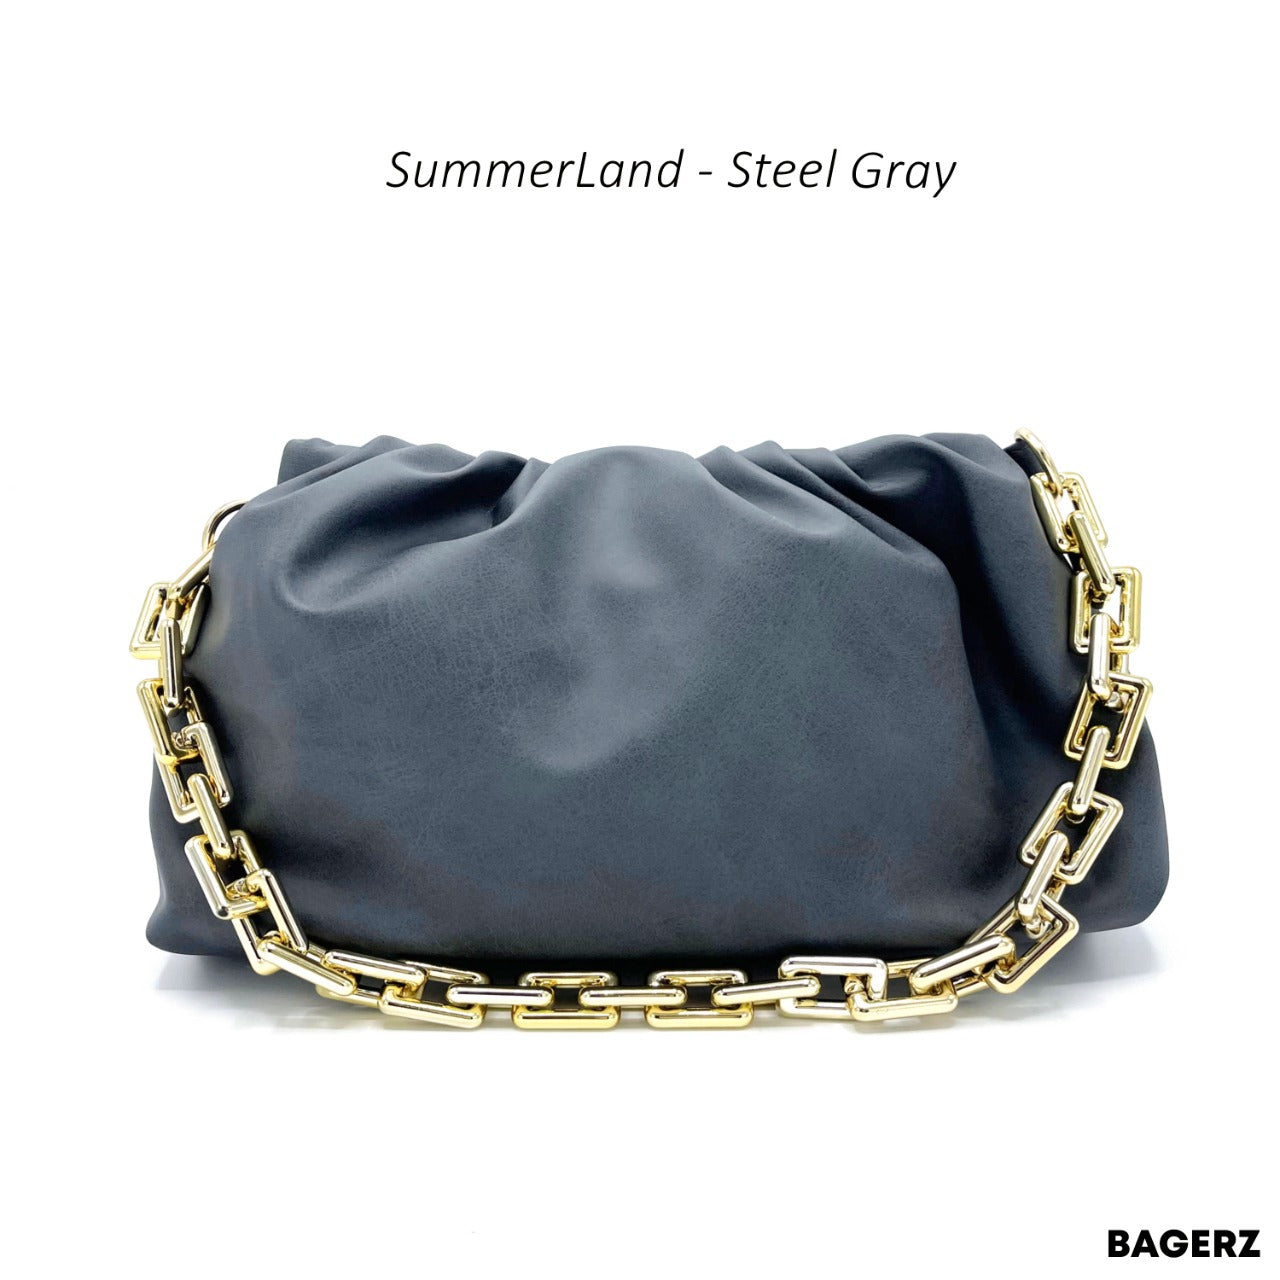 Summer Land - Steel Gray